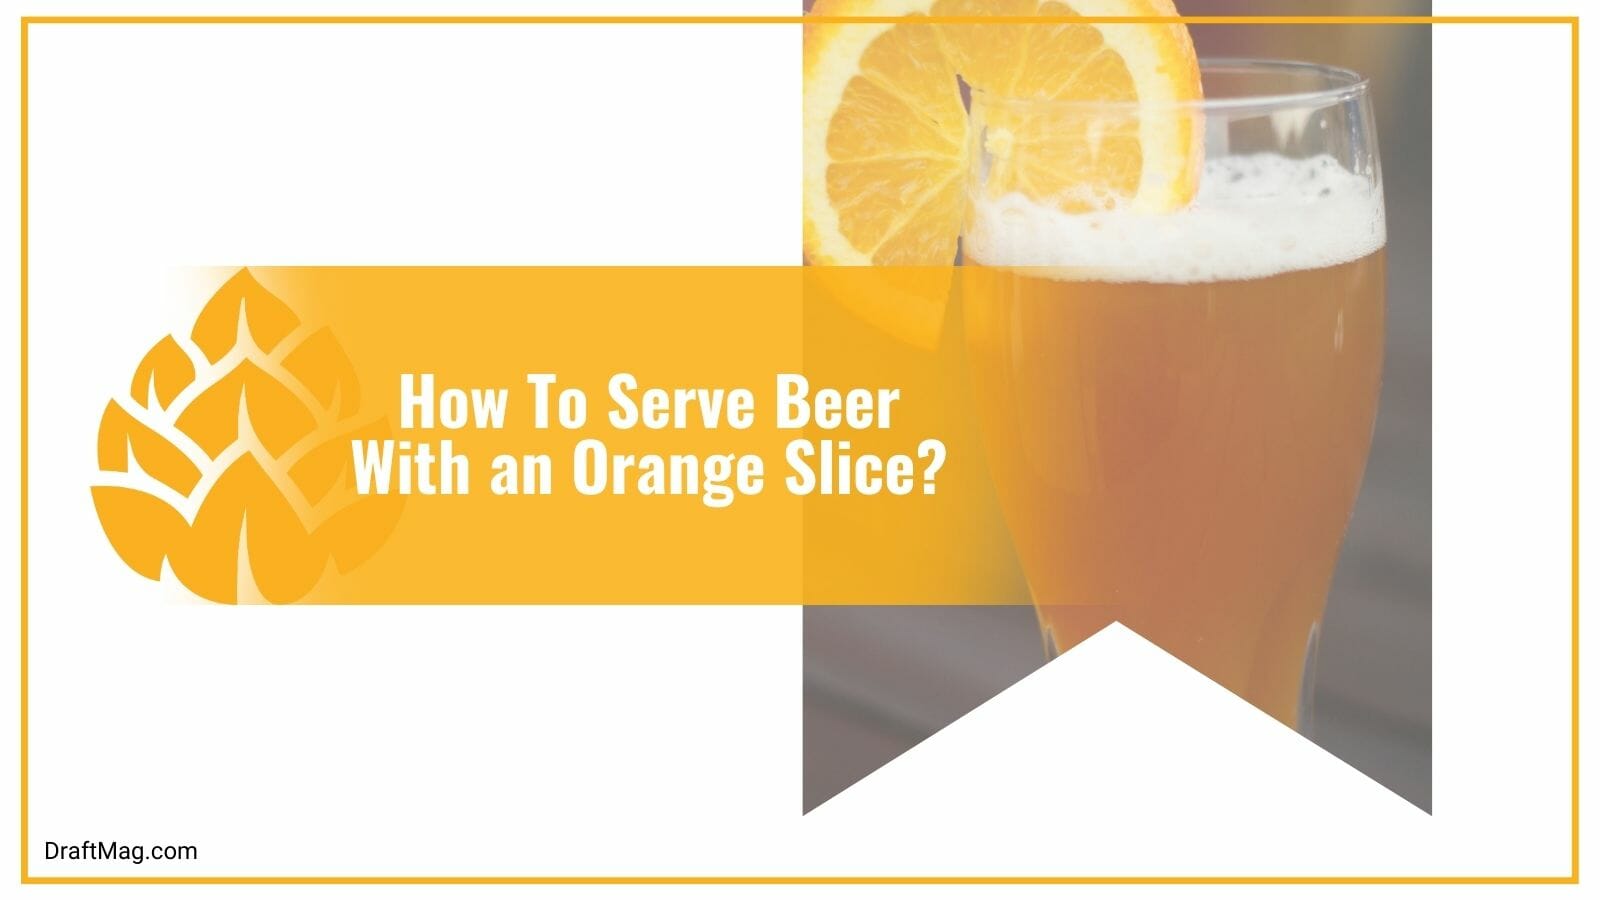 How To Serve Beer With an Orange Slice